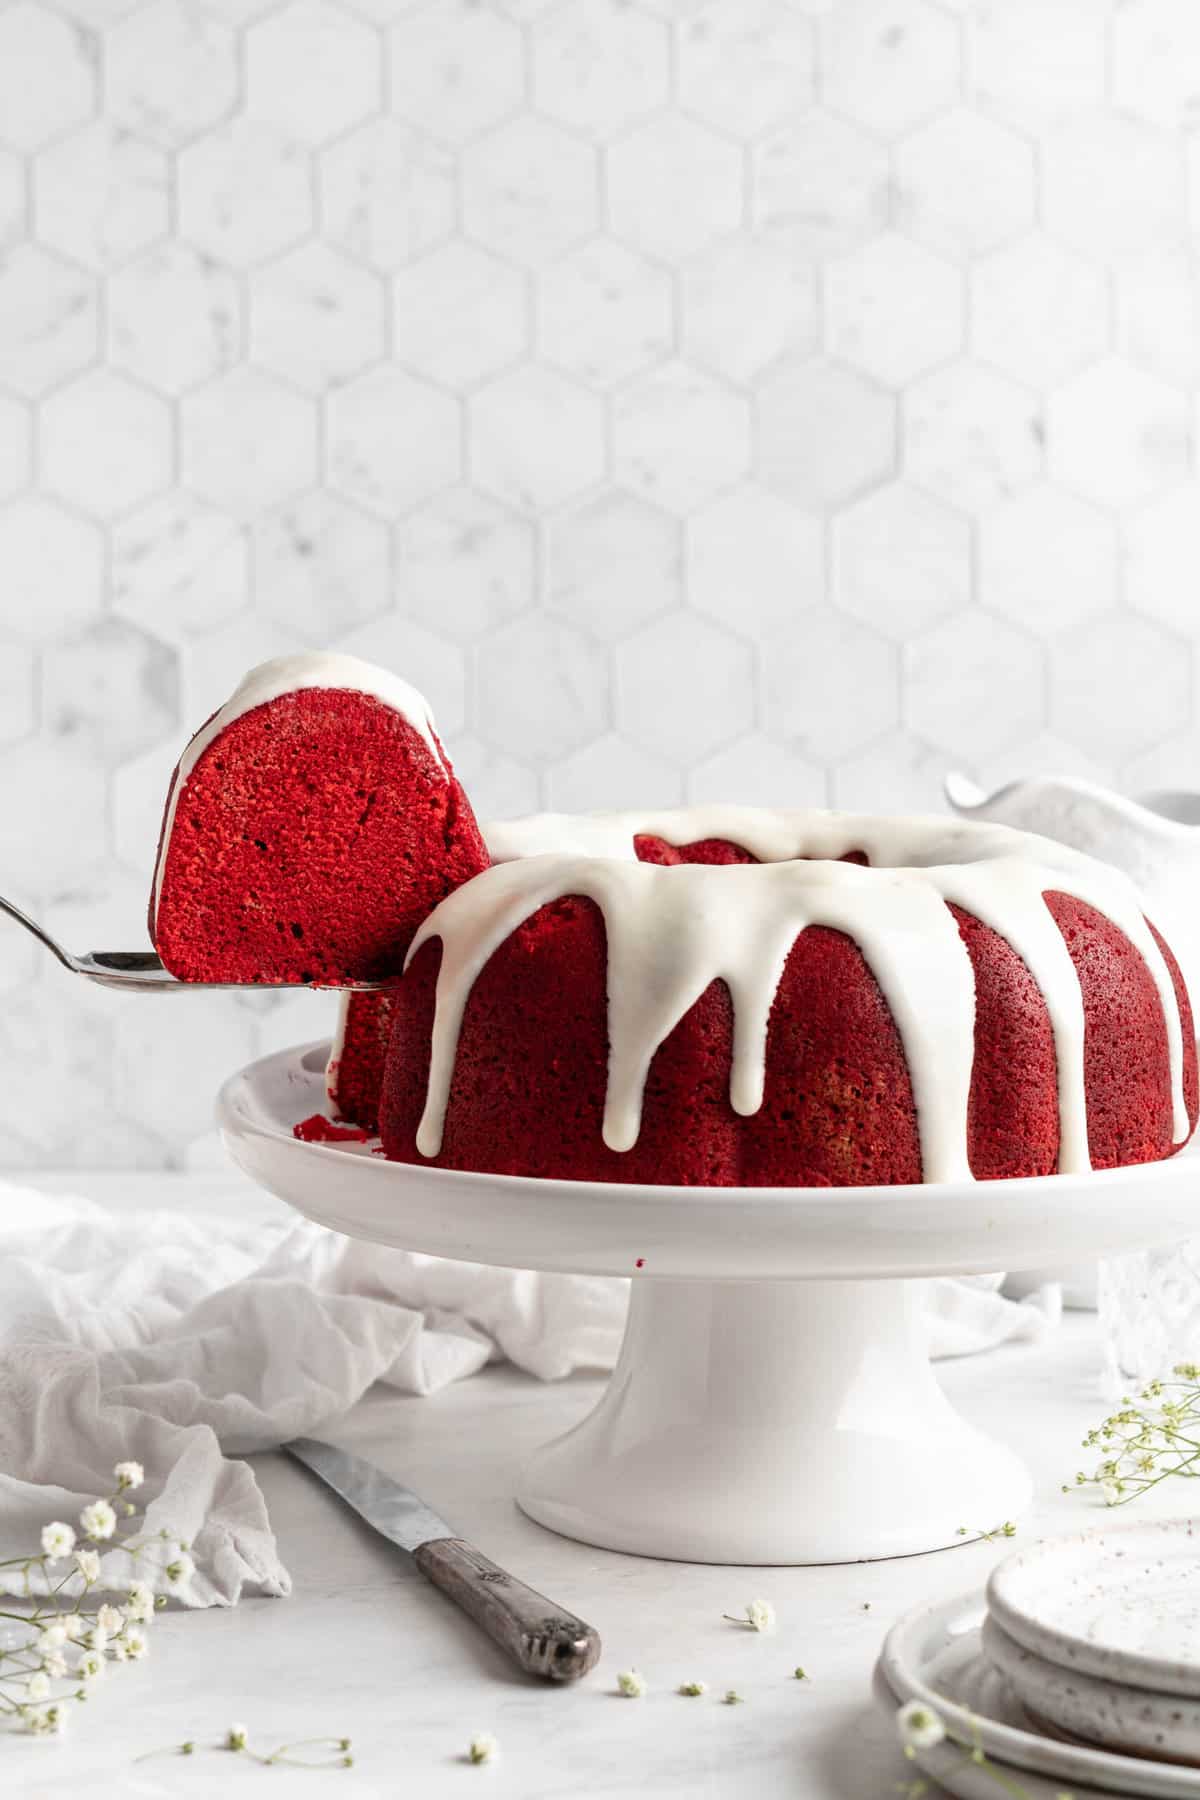 Red Velvet Bundt Cake Recipe with Cream Cheese Frosting - Six